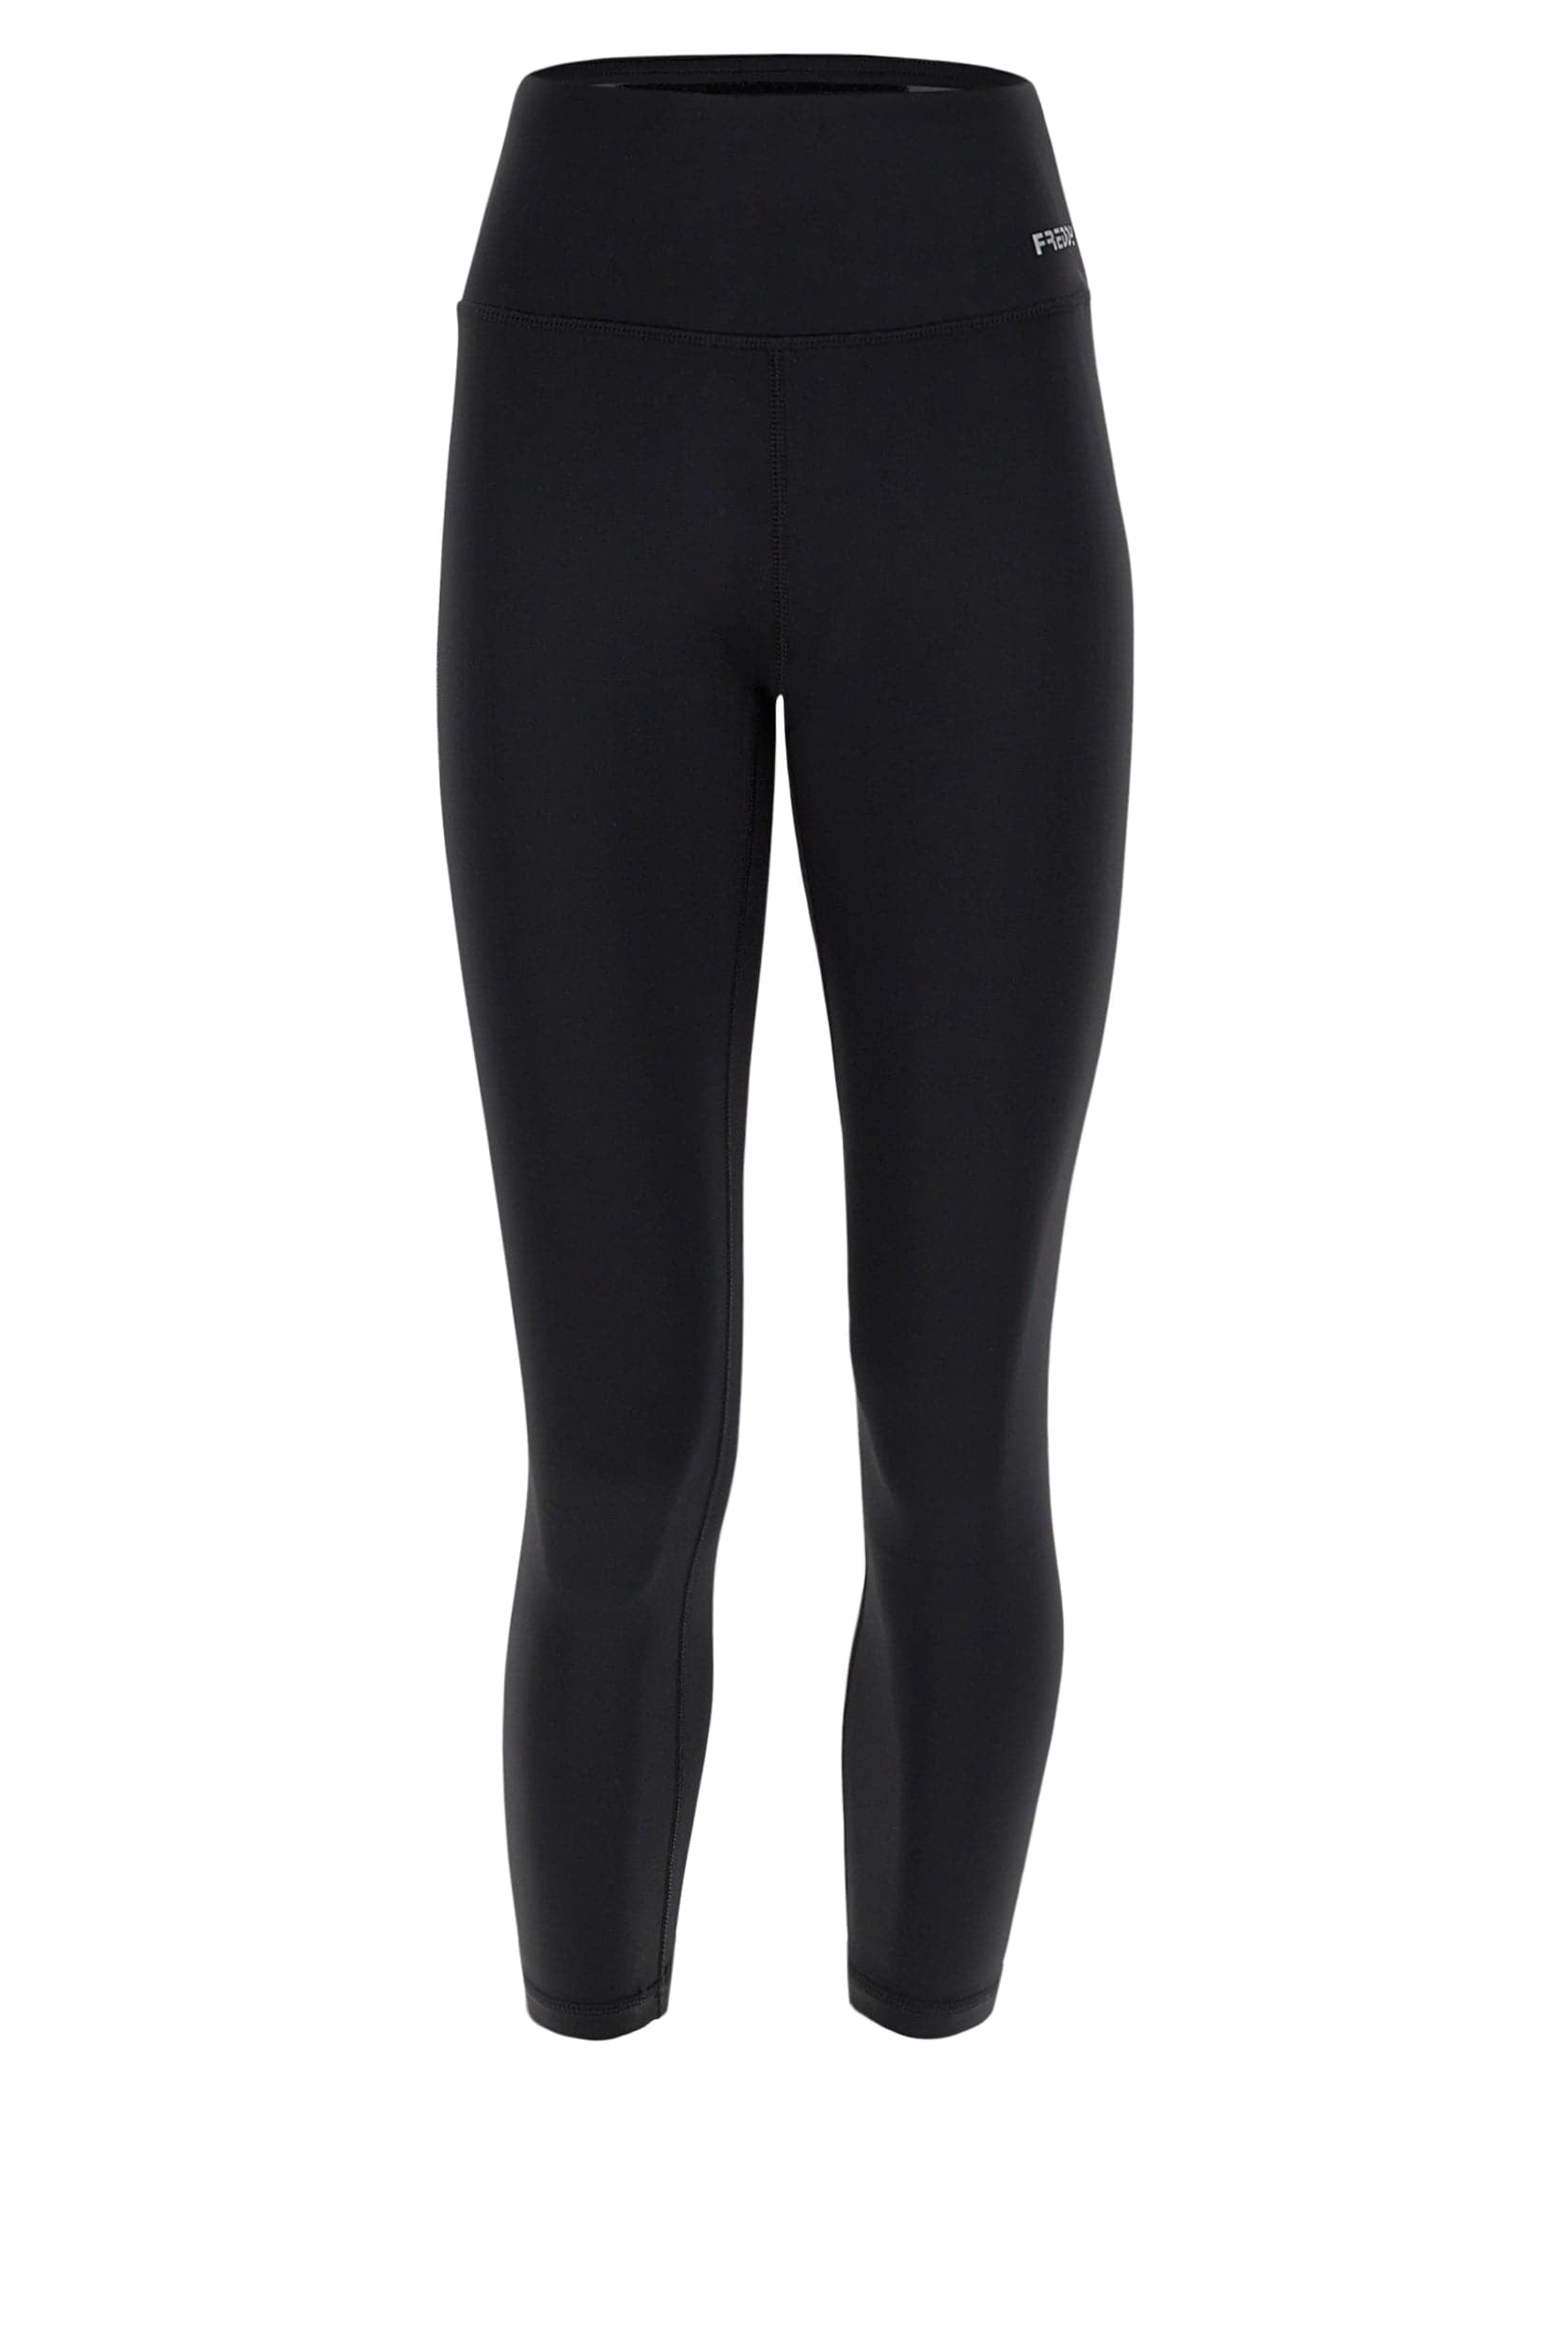 Superfit Premium Energy Pants® - High Waisted - Petite Length - Black 10